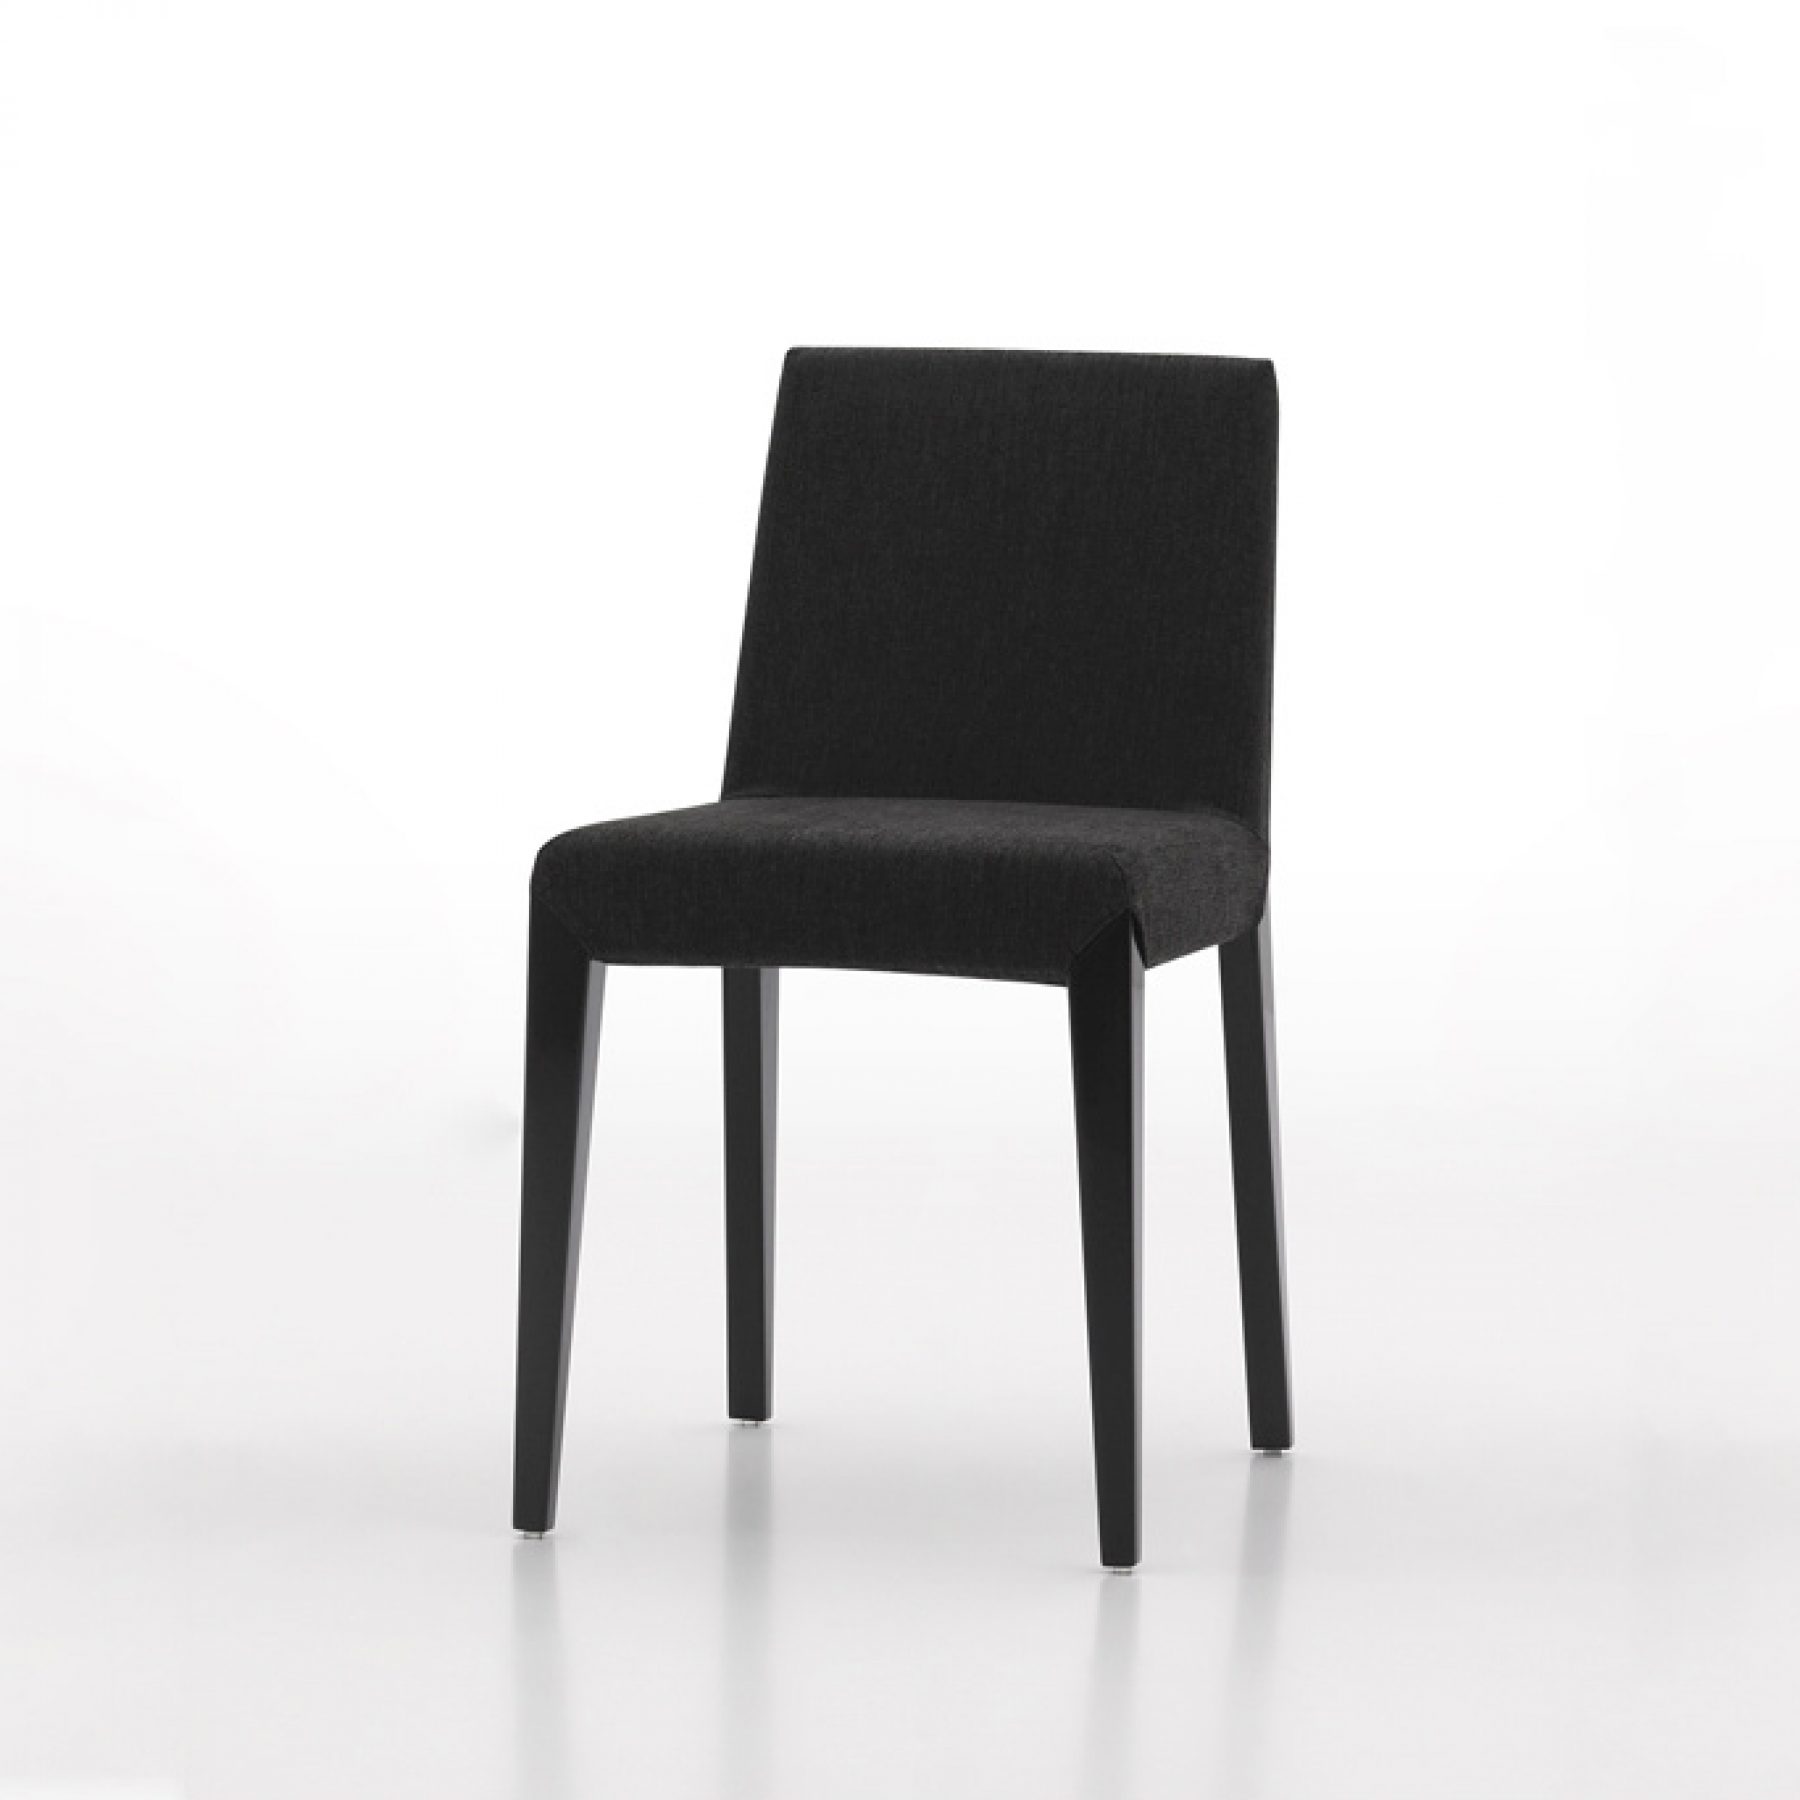 Ali Dining Chair Glossy Dark Grey Beyond Furniture,Physical Model Database Design